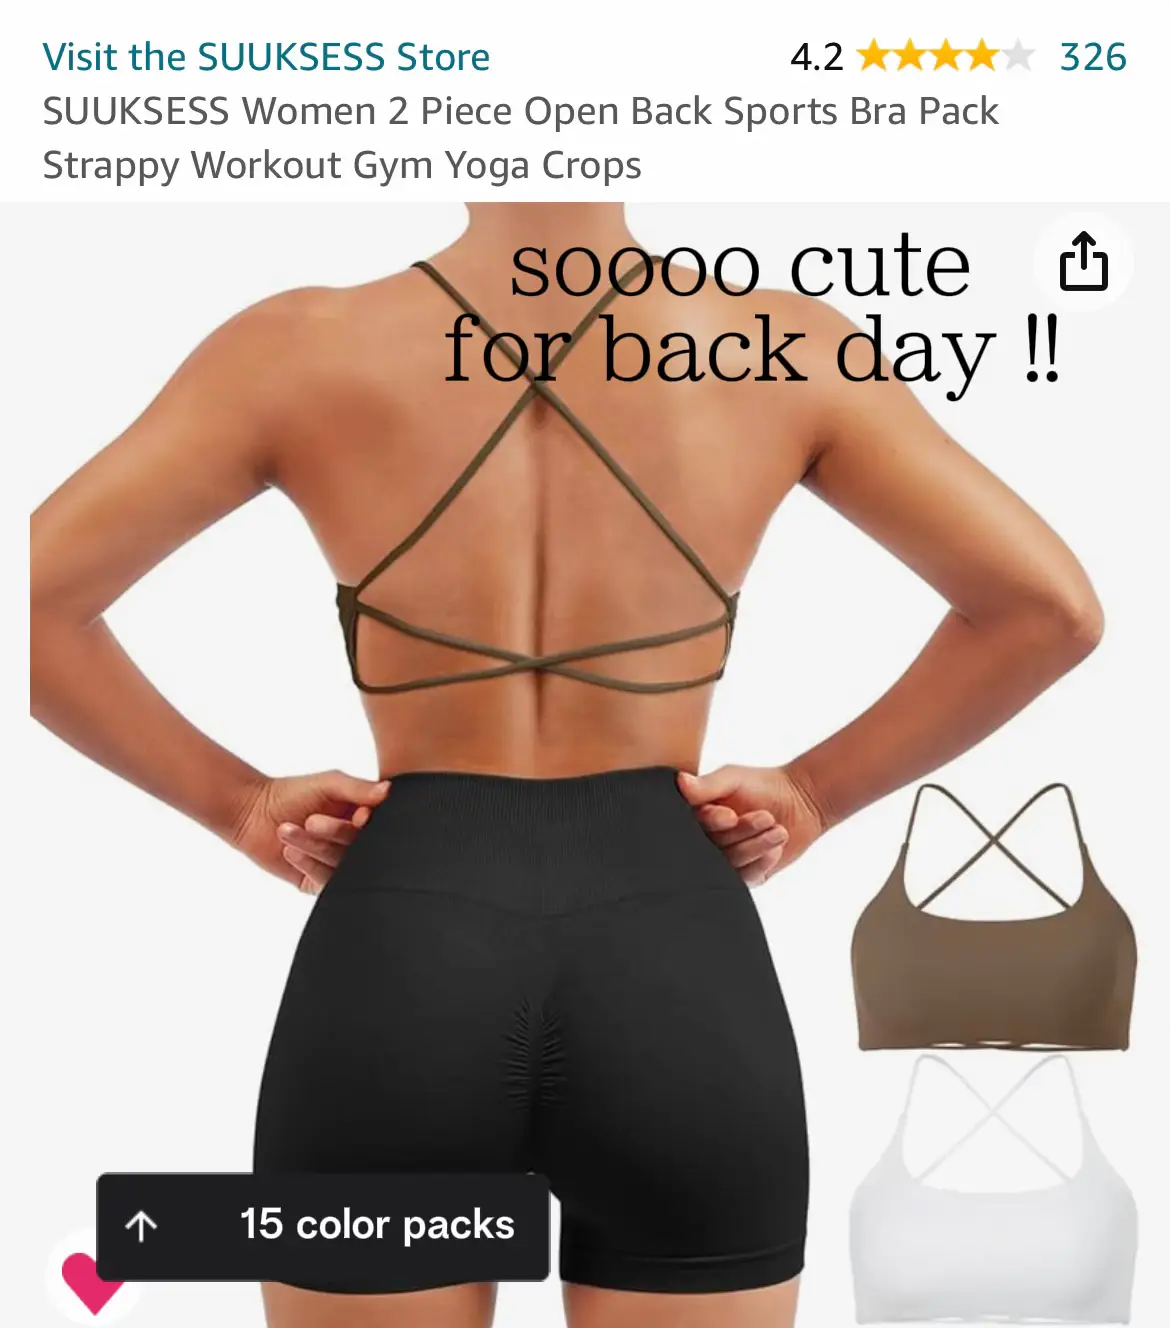 SUUKSESS Women 2 Piece Open Back Sports Bra Pack Strappy